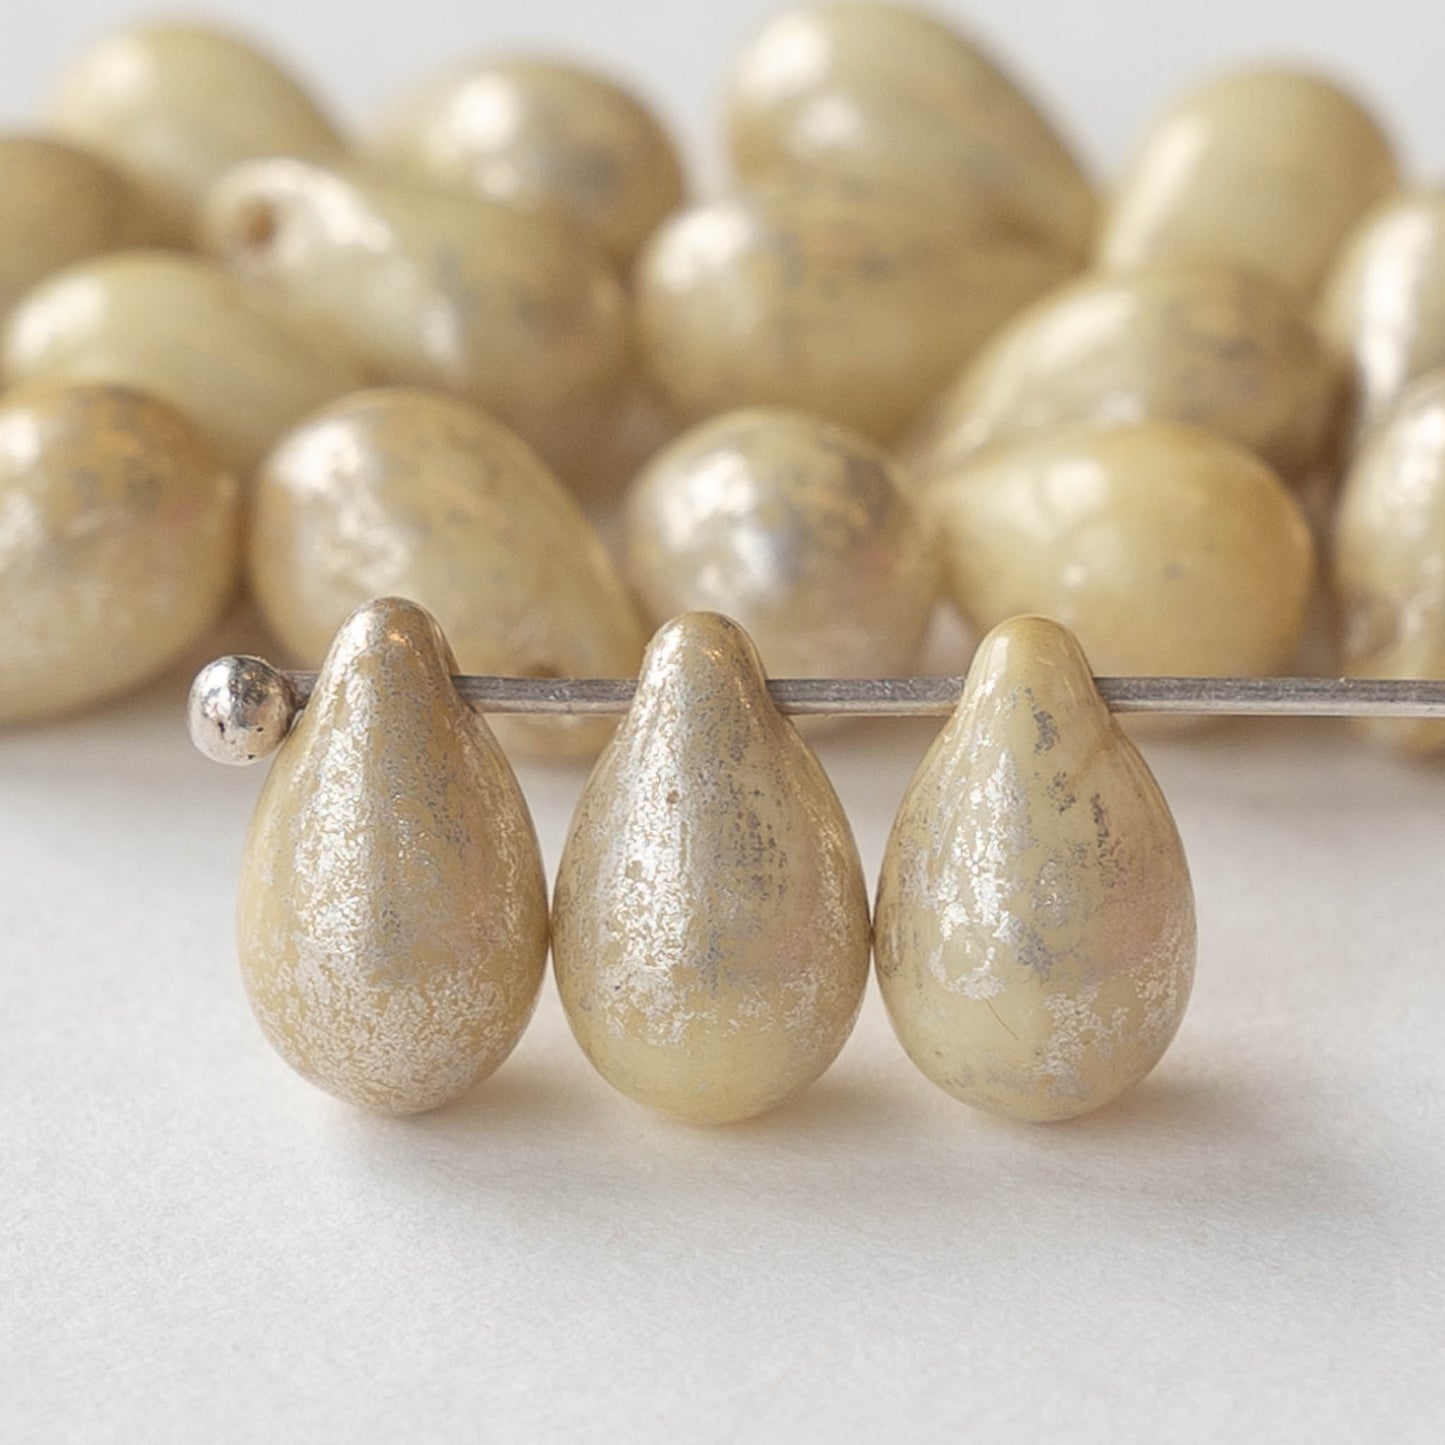 6x9mm Glass Teardrop Beads - Opaque Ivory with Mercury Finish - 25 Beads